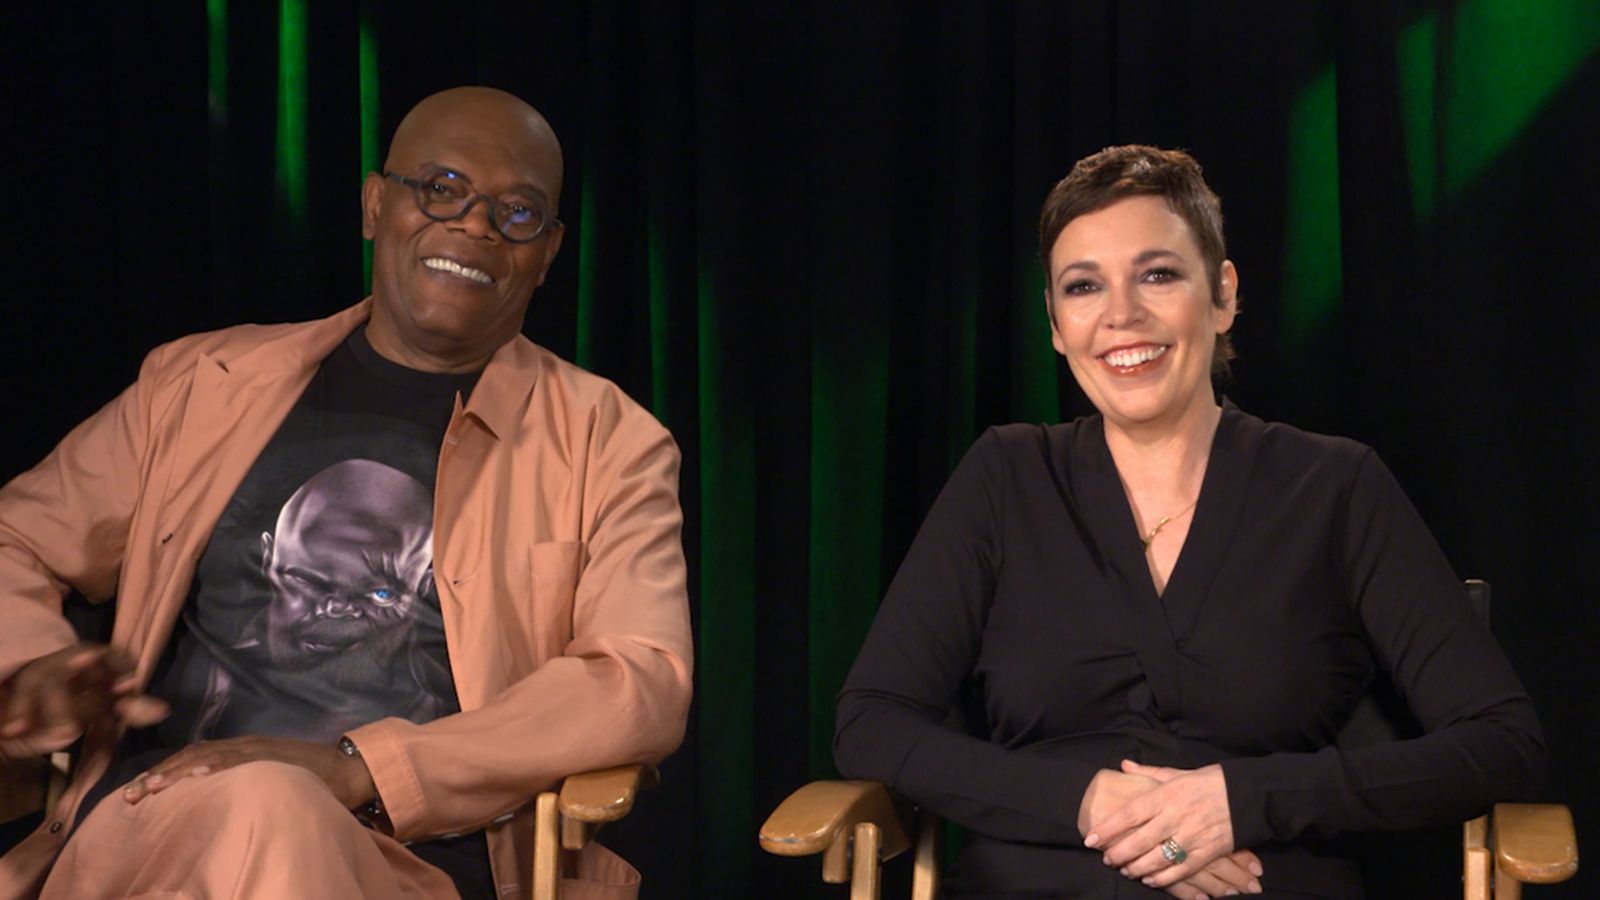 Secret Invasion: Samuel L. Jackson, Olivia Colman Talk Marvel Show – The  Hollywood Reporter